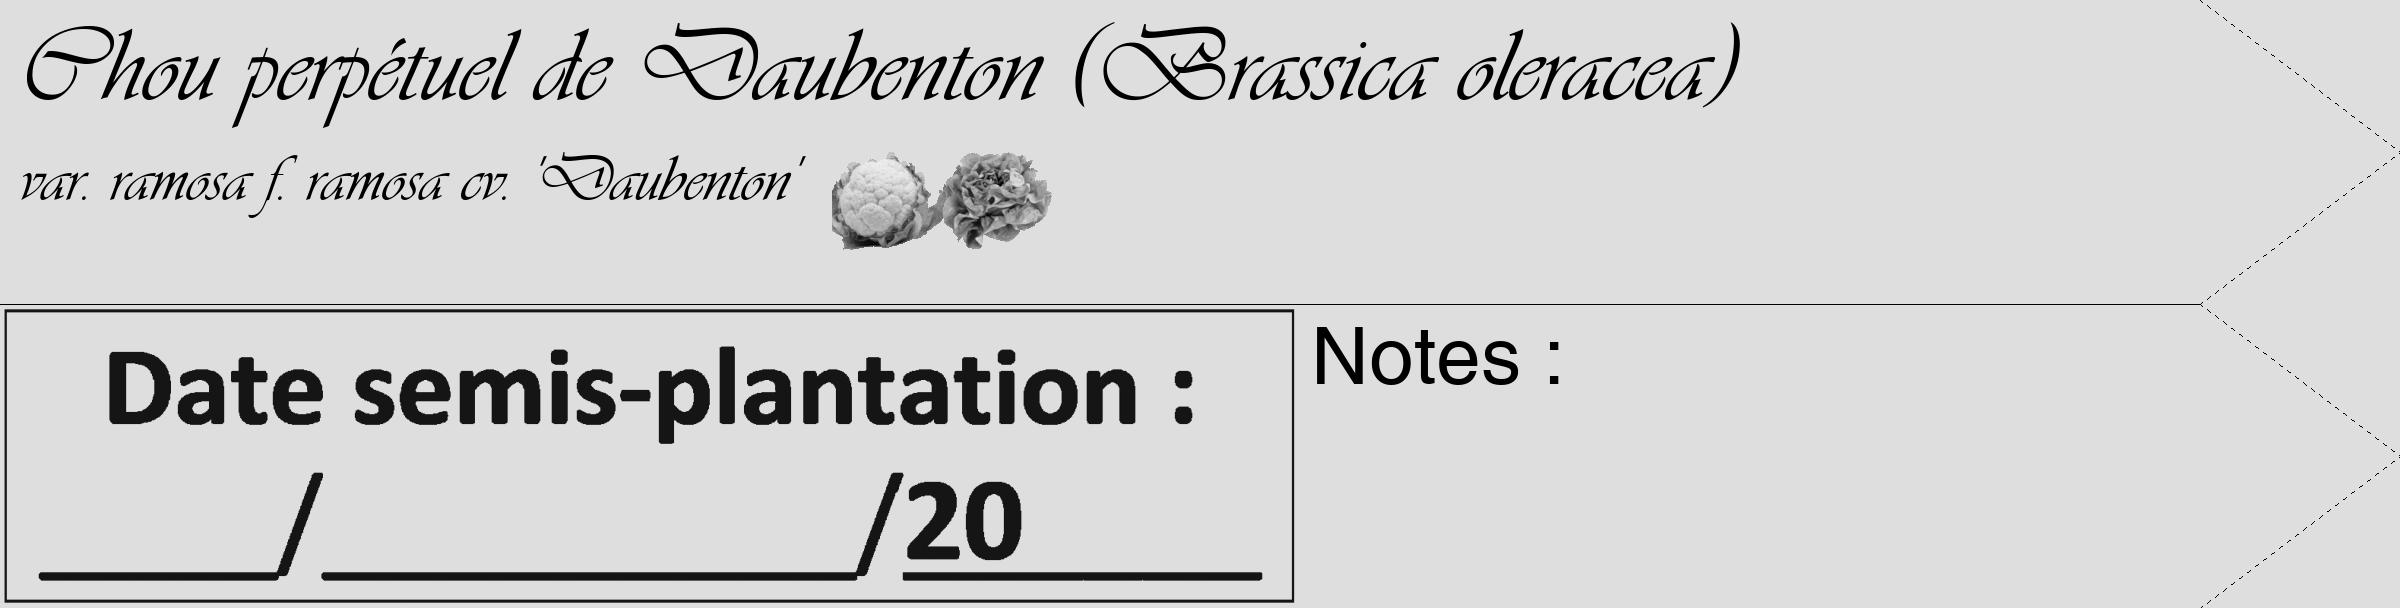 Étiquette de : Brassica oleracea var. ramosa f. ramosa cv. 'Daubenton' - format c - style noire20simple_simple_simpleviv avec comestibilité simplifiée